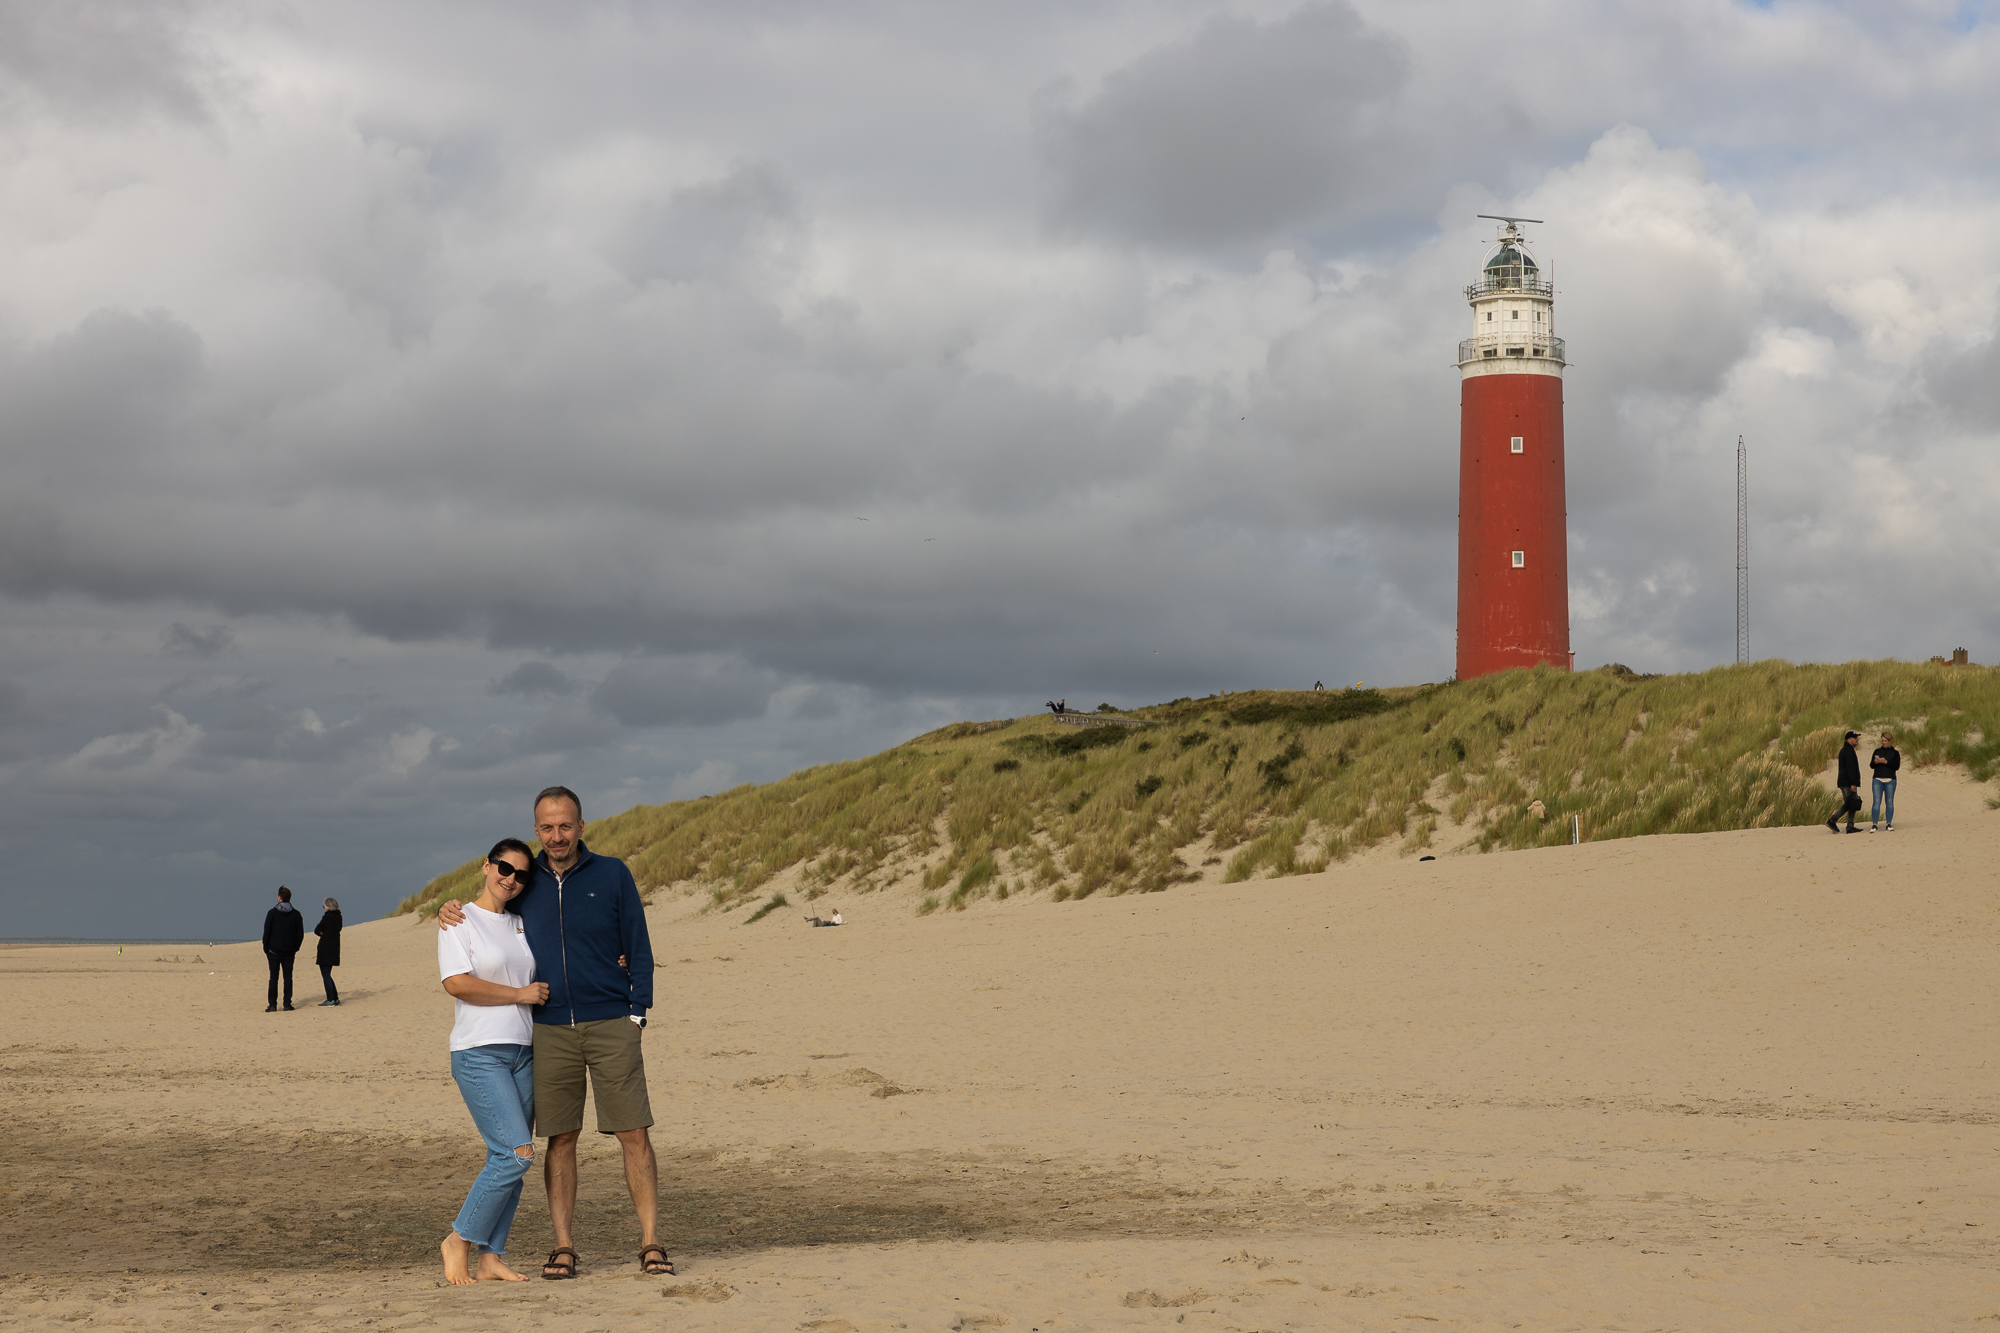 Souvenir photo at the Texel lighthouse...